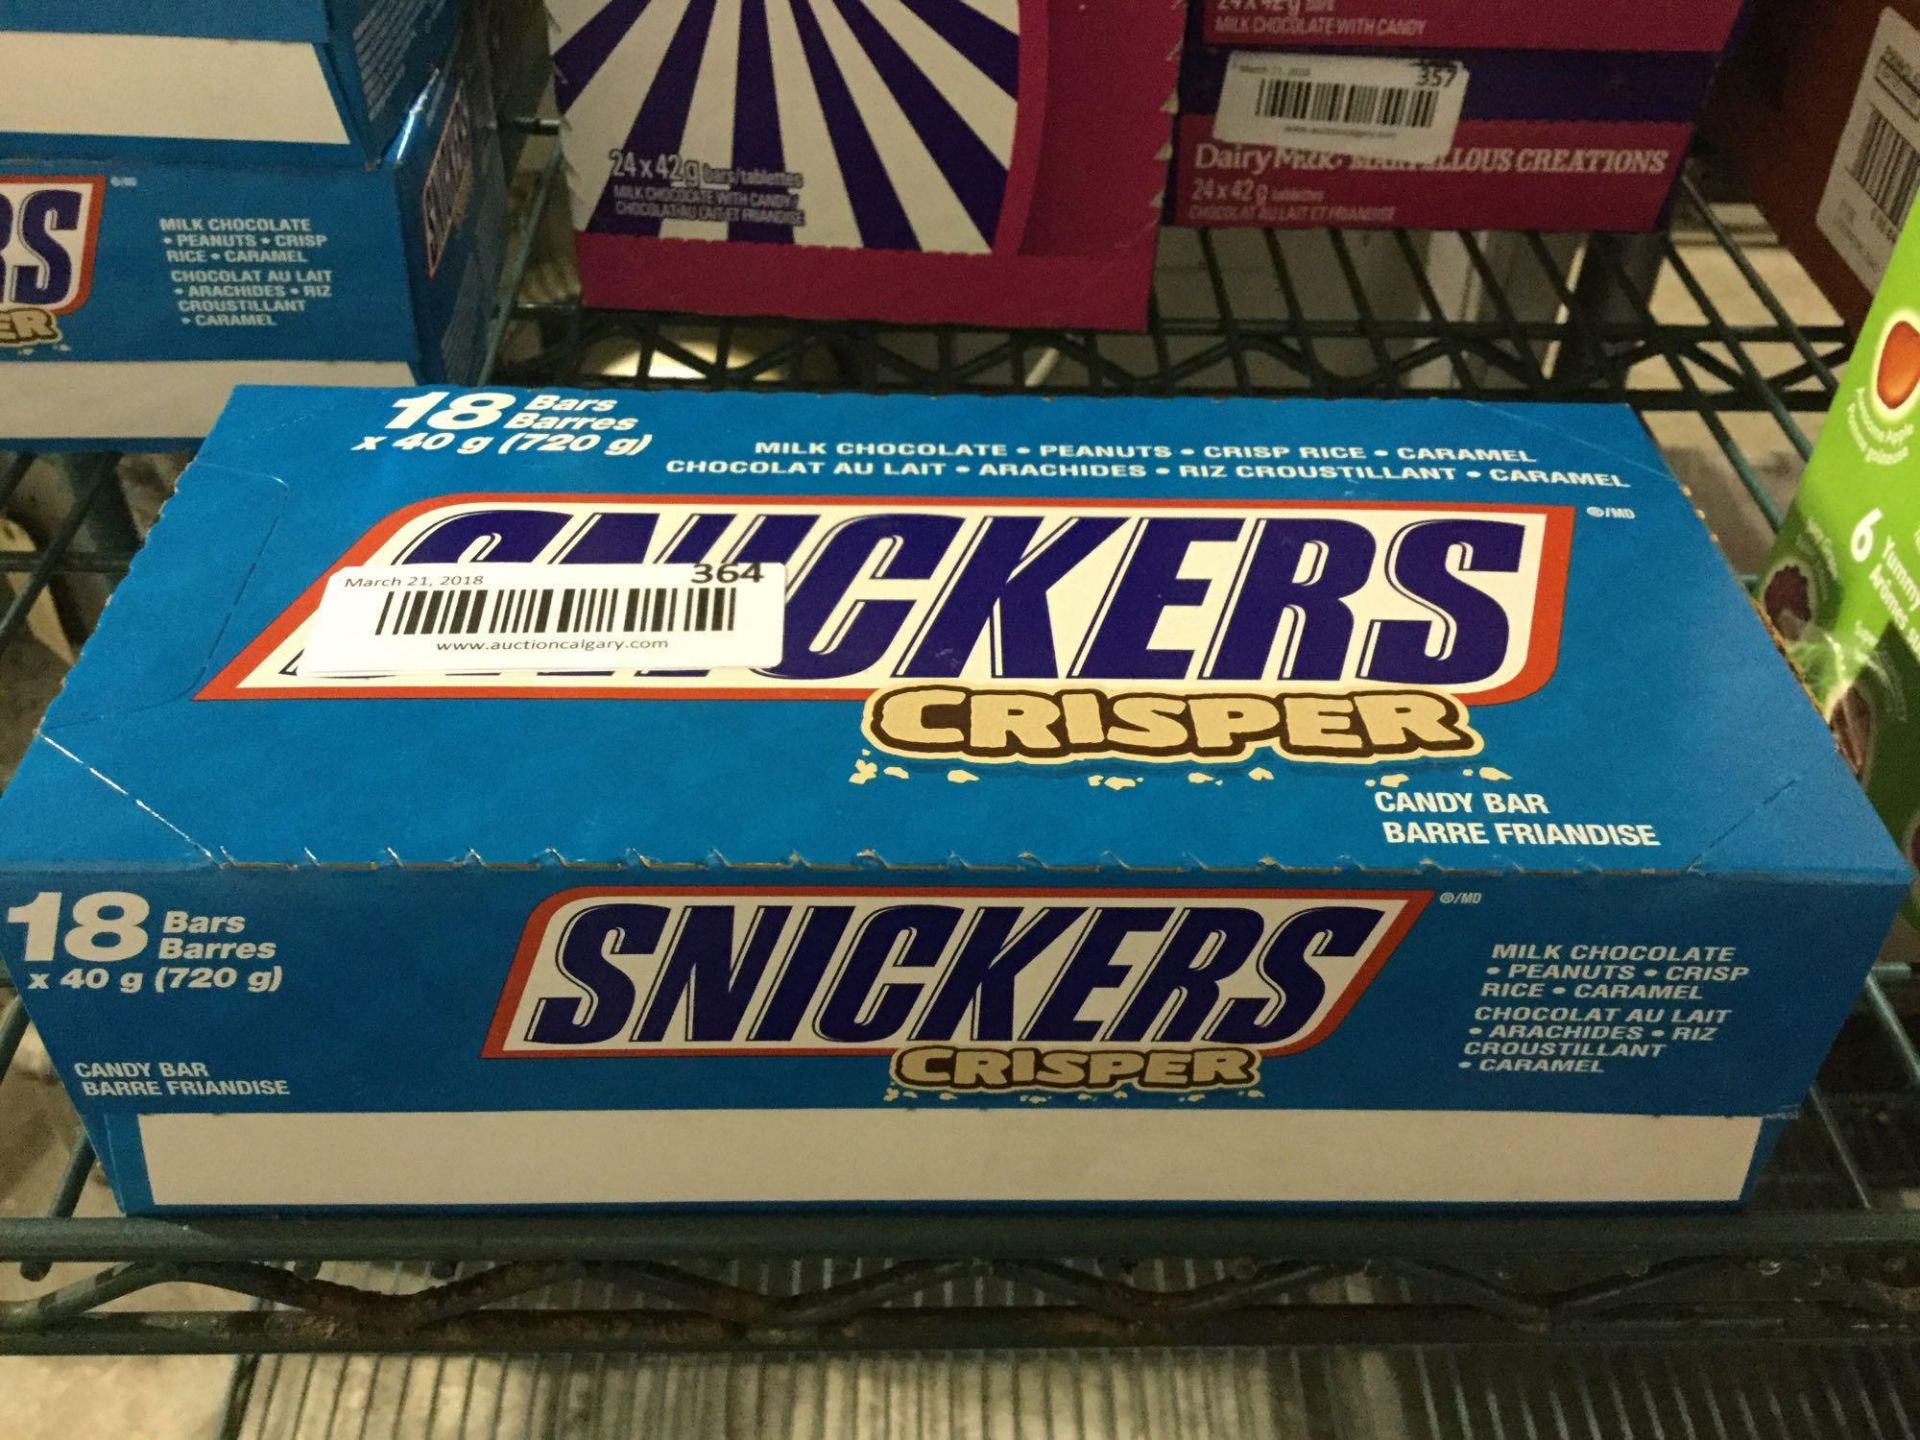 Case of 18 x 40 g Snickers Crisper Candy Bars